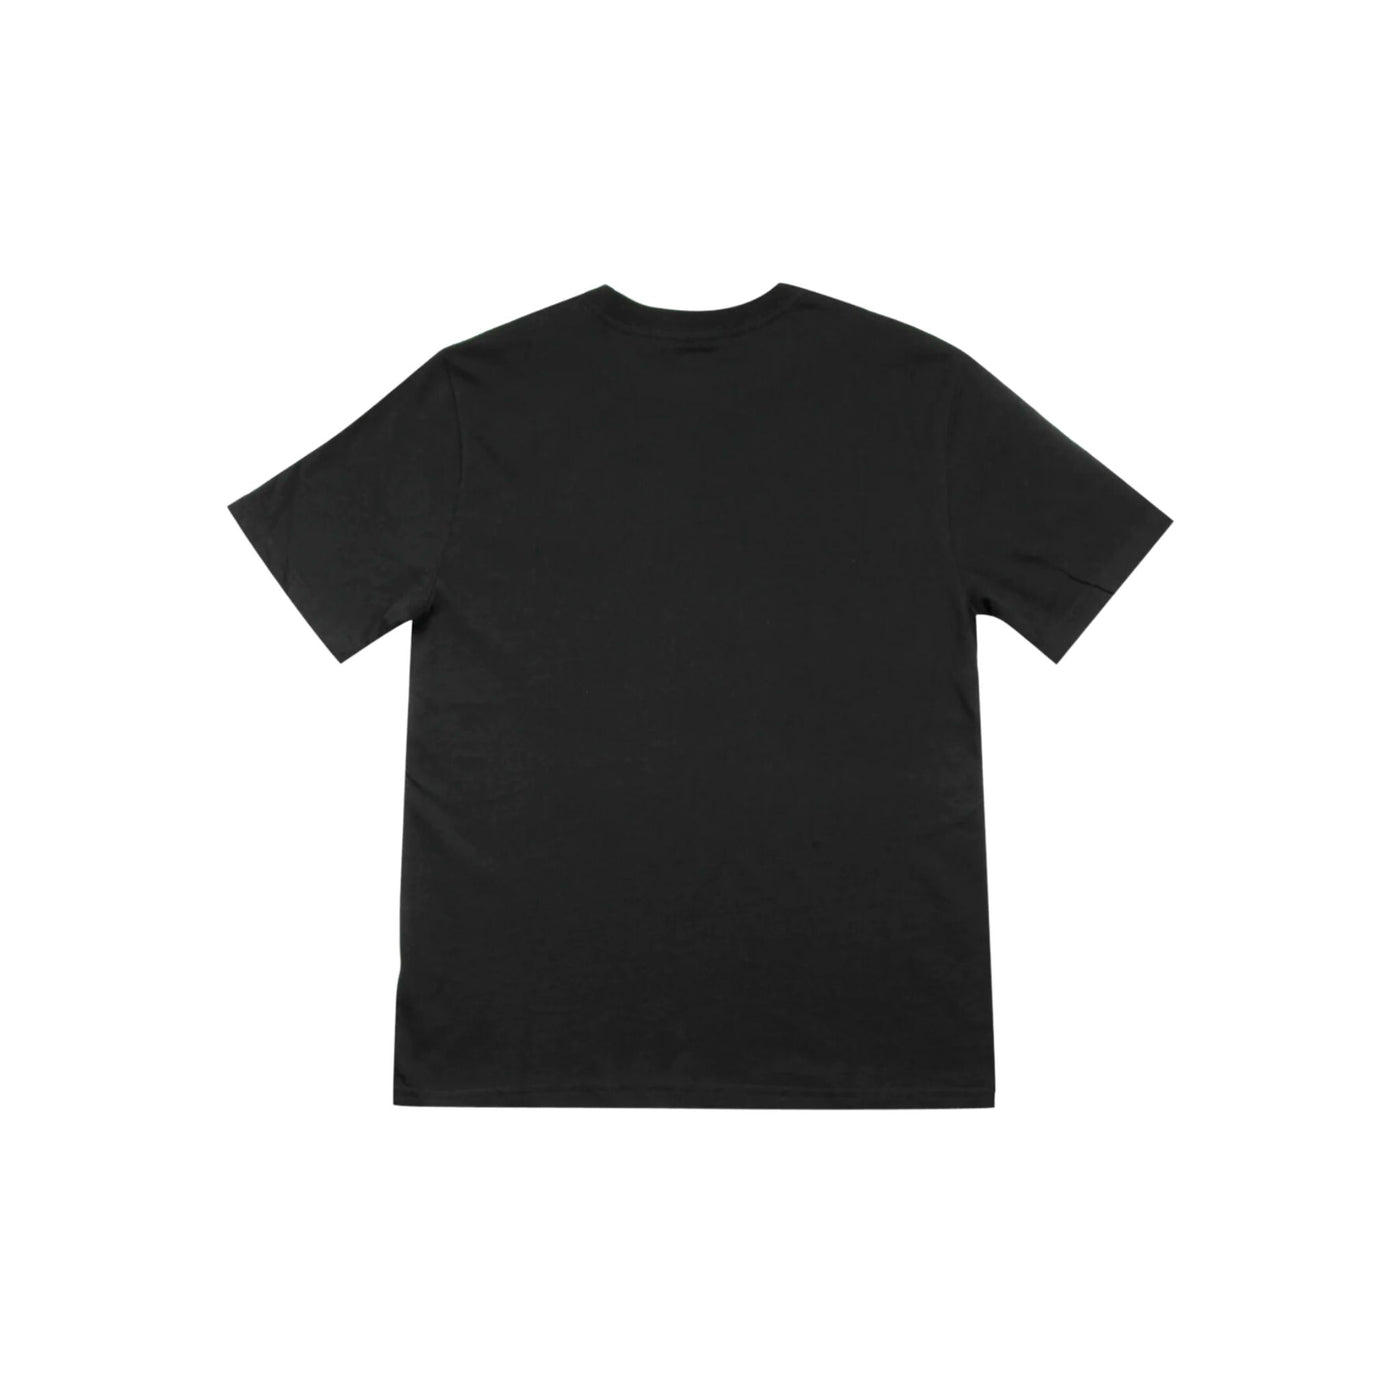 T-shirt nera da bambino, polo ralph lauren, retro